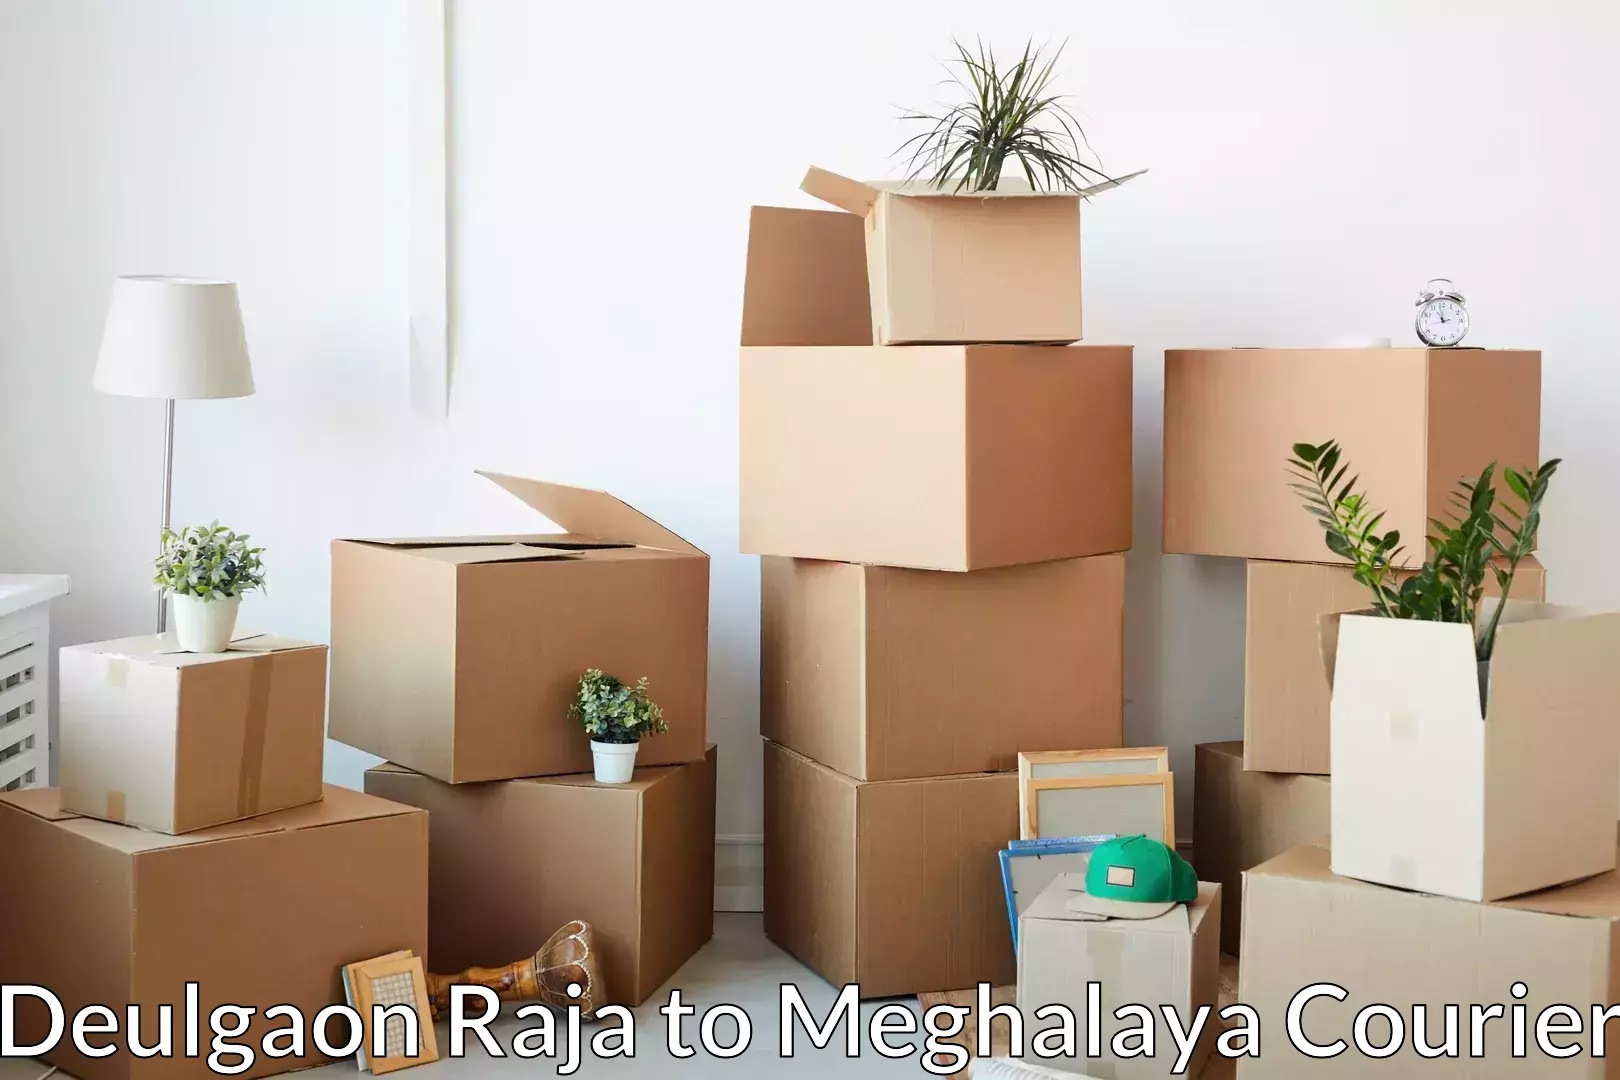 Furniture relocation experts Deulgaon Raja to Meghalaya